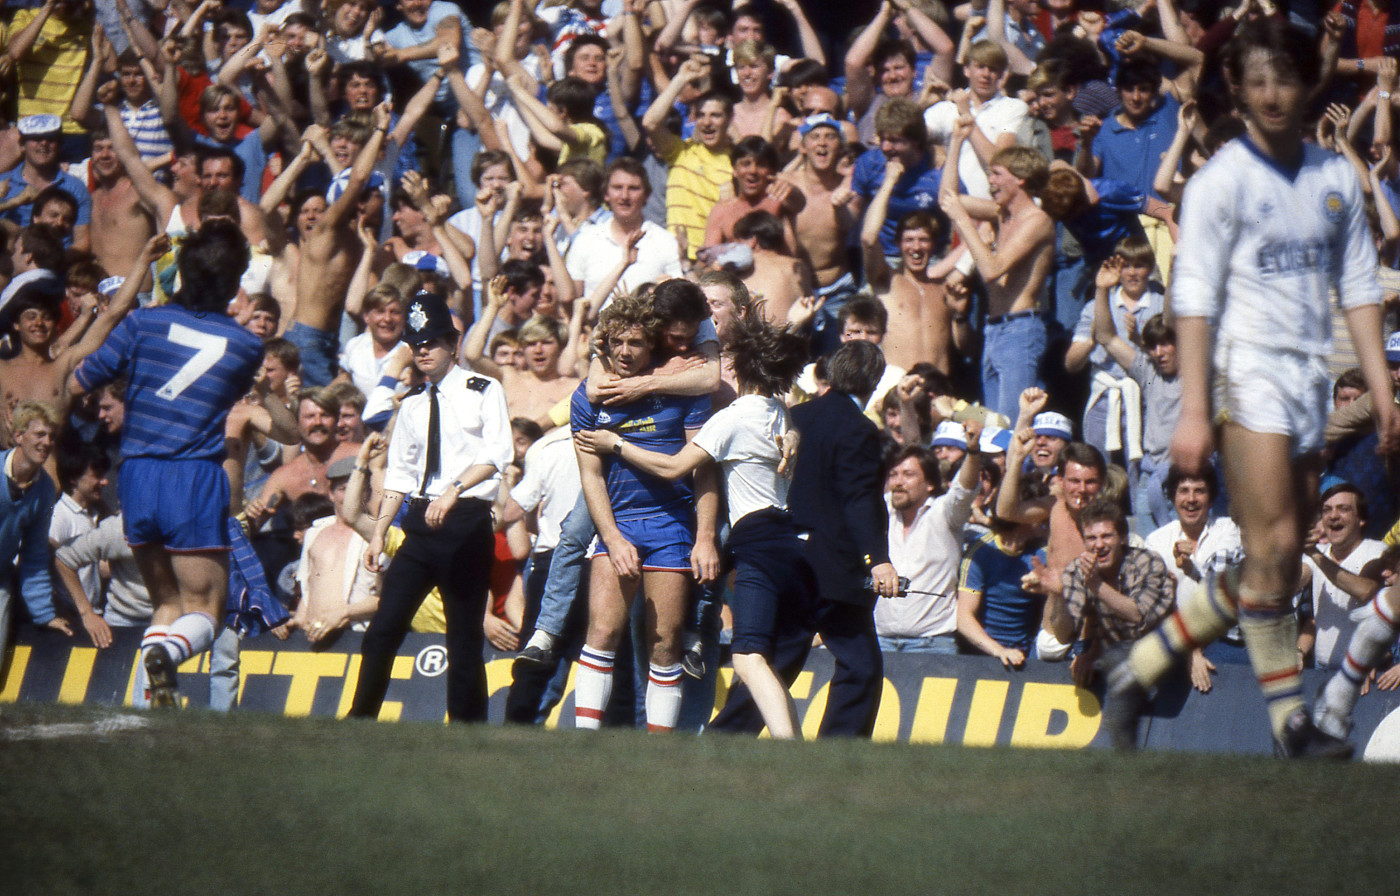 Kerry Dixon scored a hat-trick vs Leeds in 1984